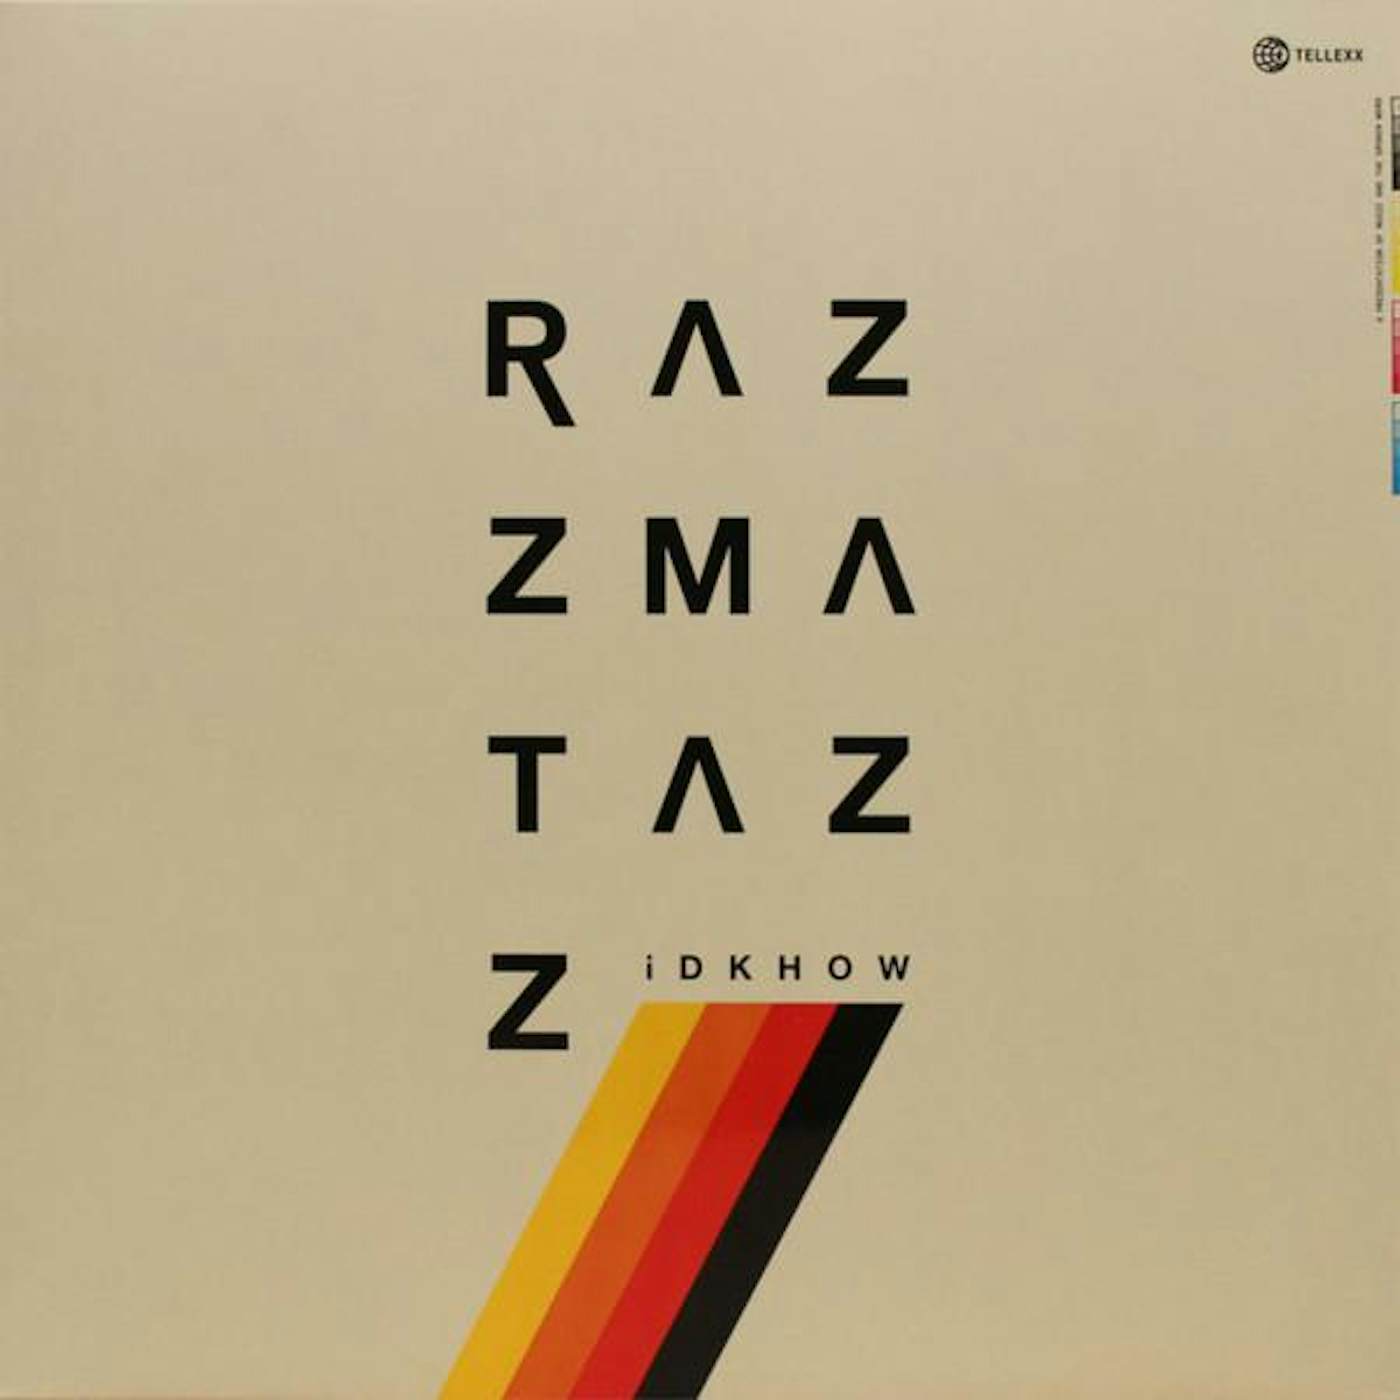 I DONT KNOW HOW BUT THEY FOUND ME RAZZMATAZZ Vinyl Record